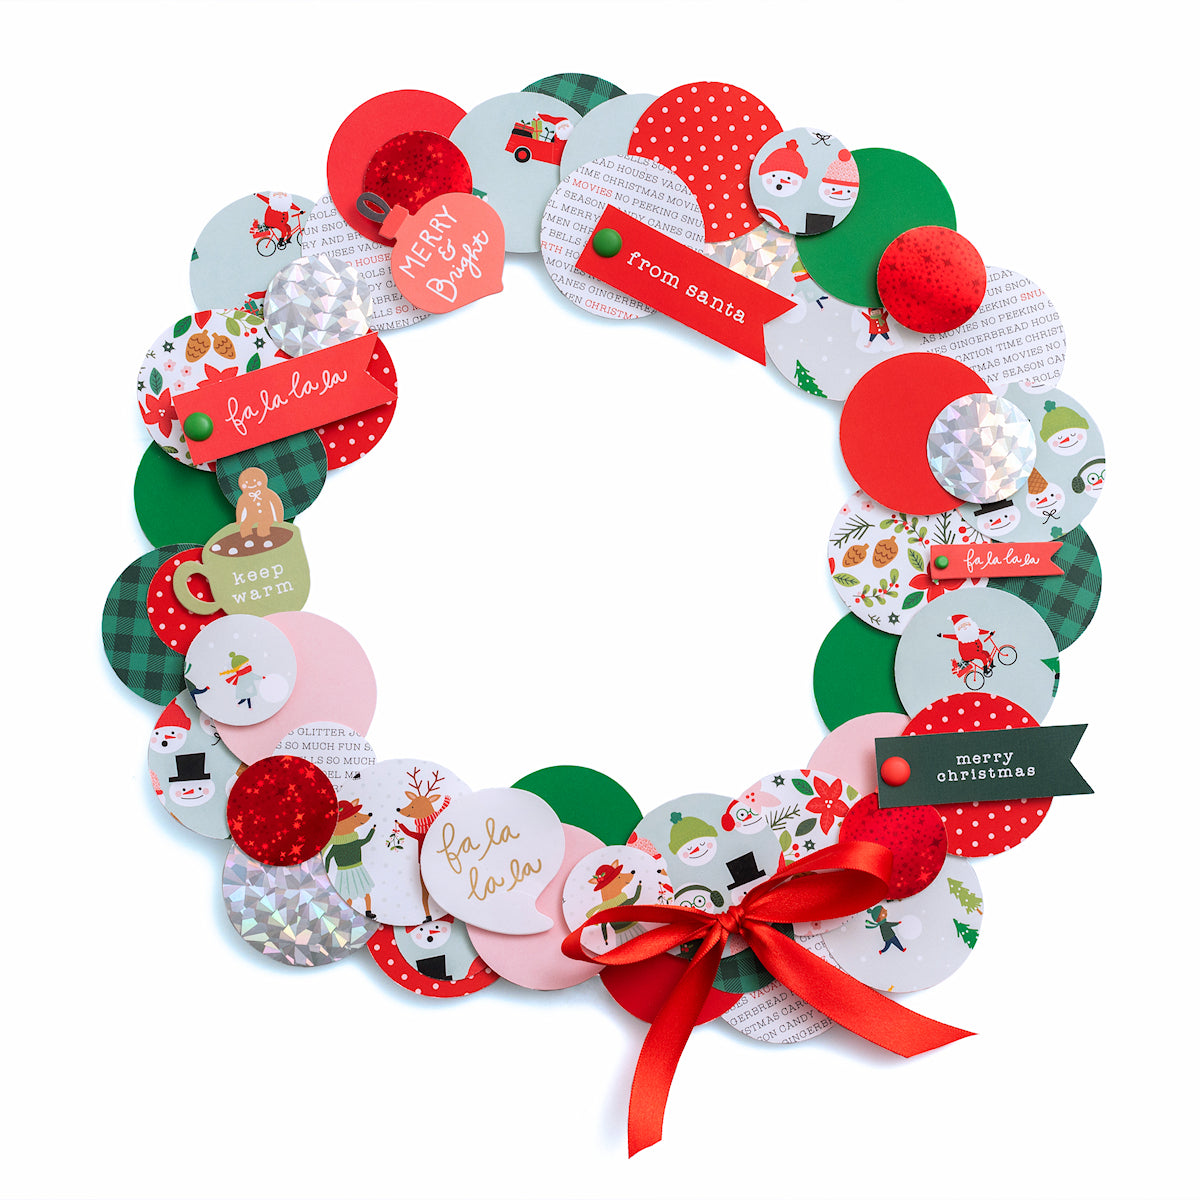 Pebbles Christmas Gift Tags + Ephemera with Sayings | www.sprinklebeesweet.com